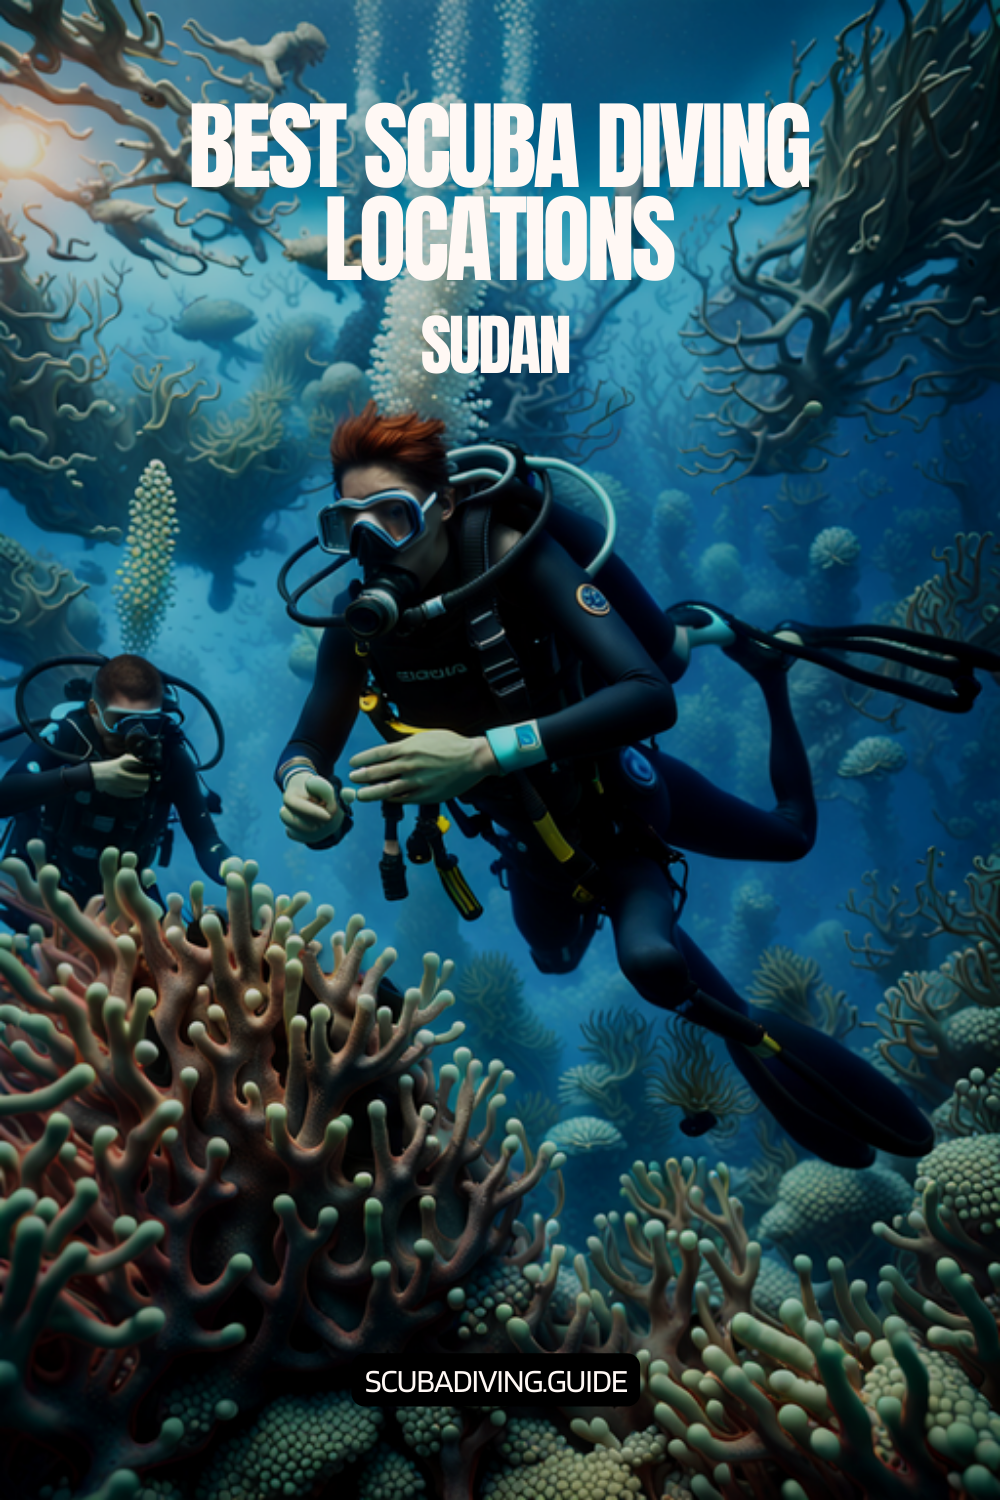 Scuba Diving Locations in Sudan